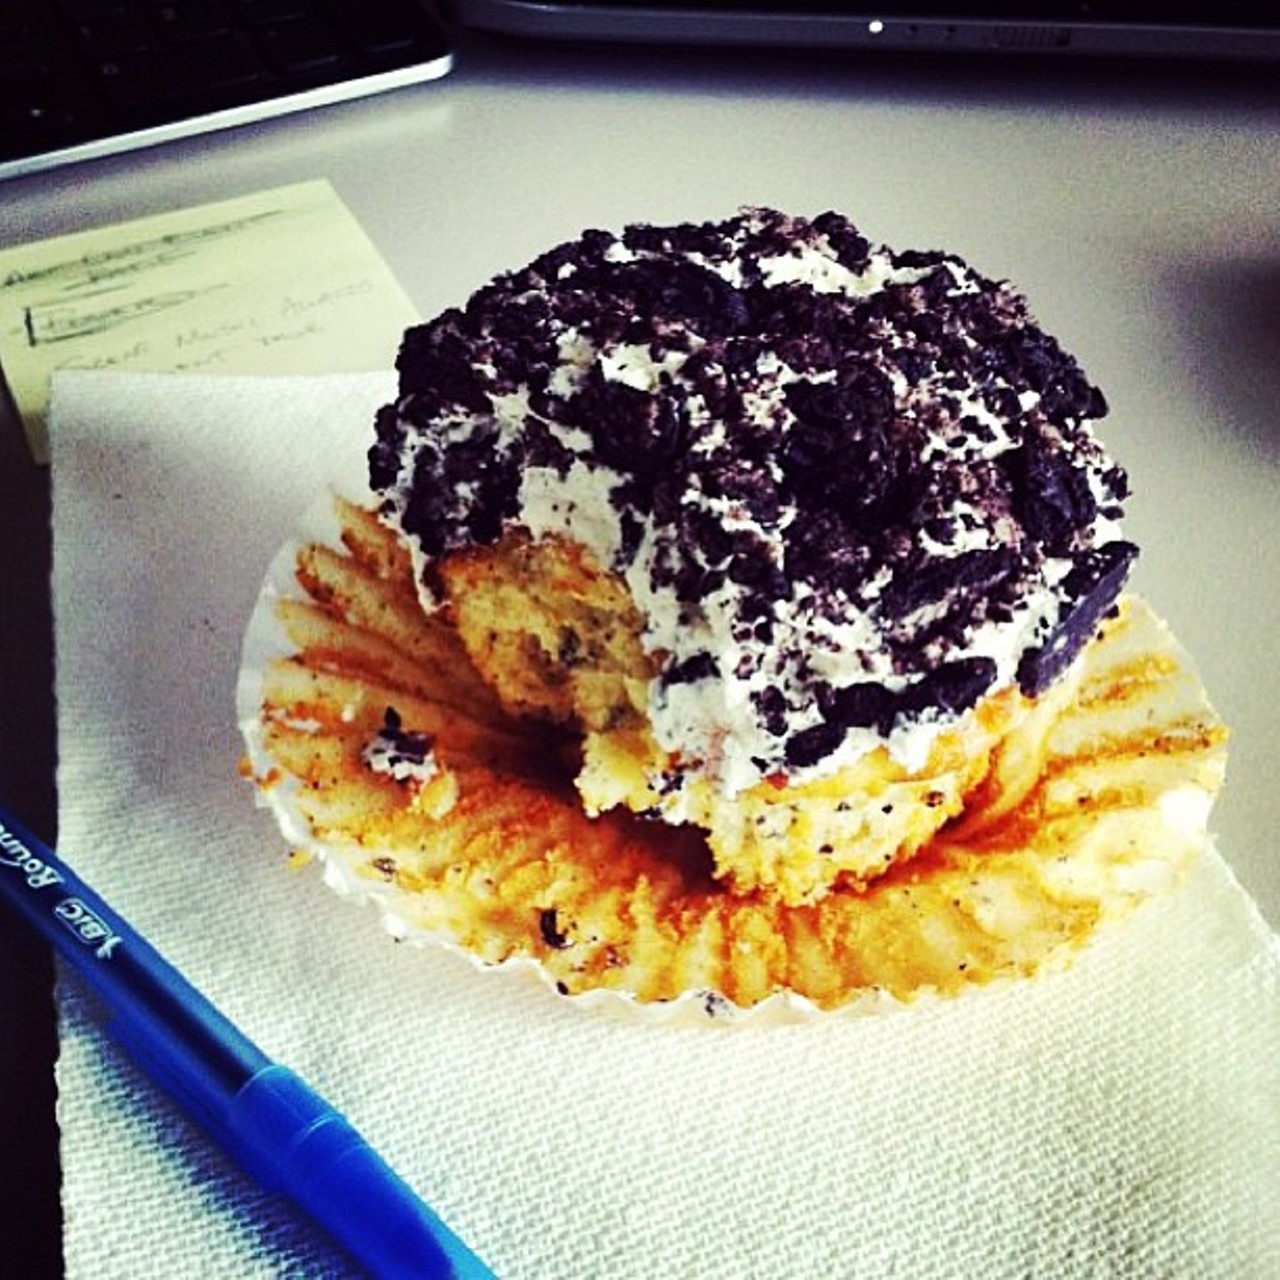 @michaelmcgrathjr thanks for this awesome pic! #regram #cookiesandcream #oreo #backtoschool #studybreak #wifi #cleveland #cupcakes #colossal #dessert #foodporn #yum #funcupcakes